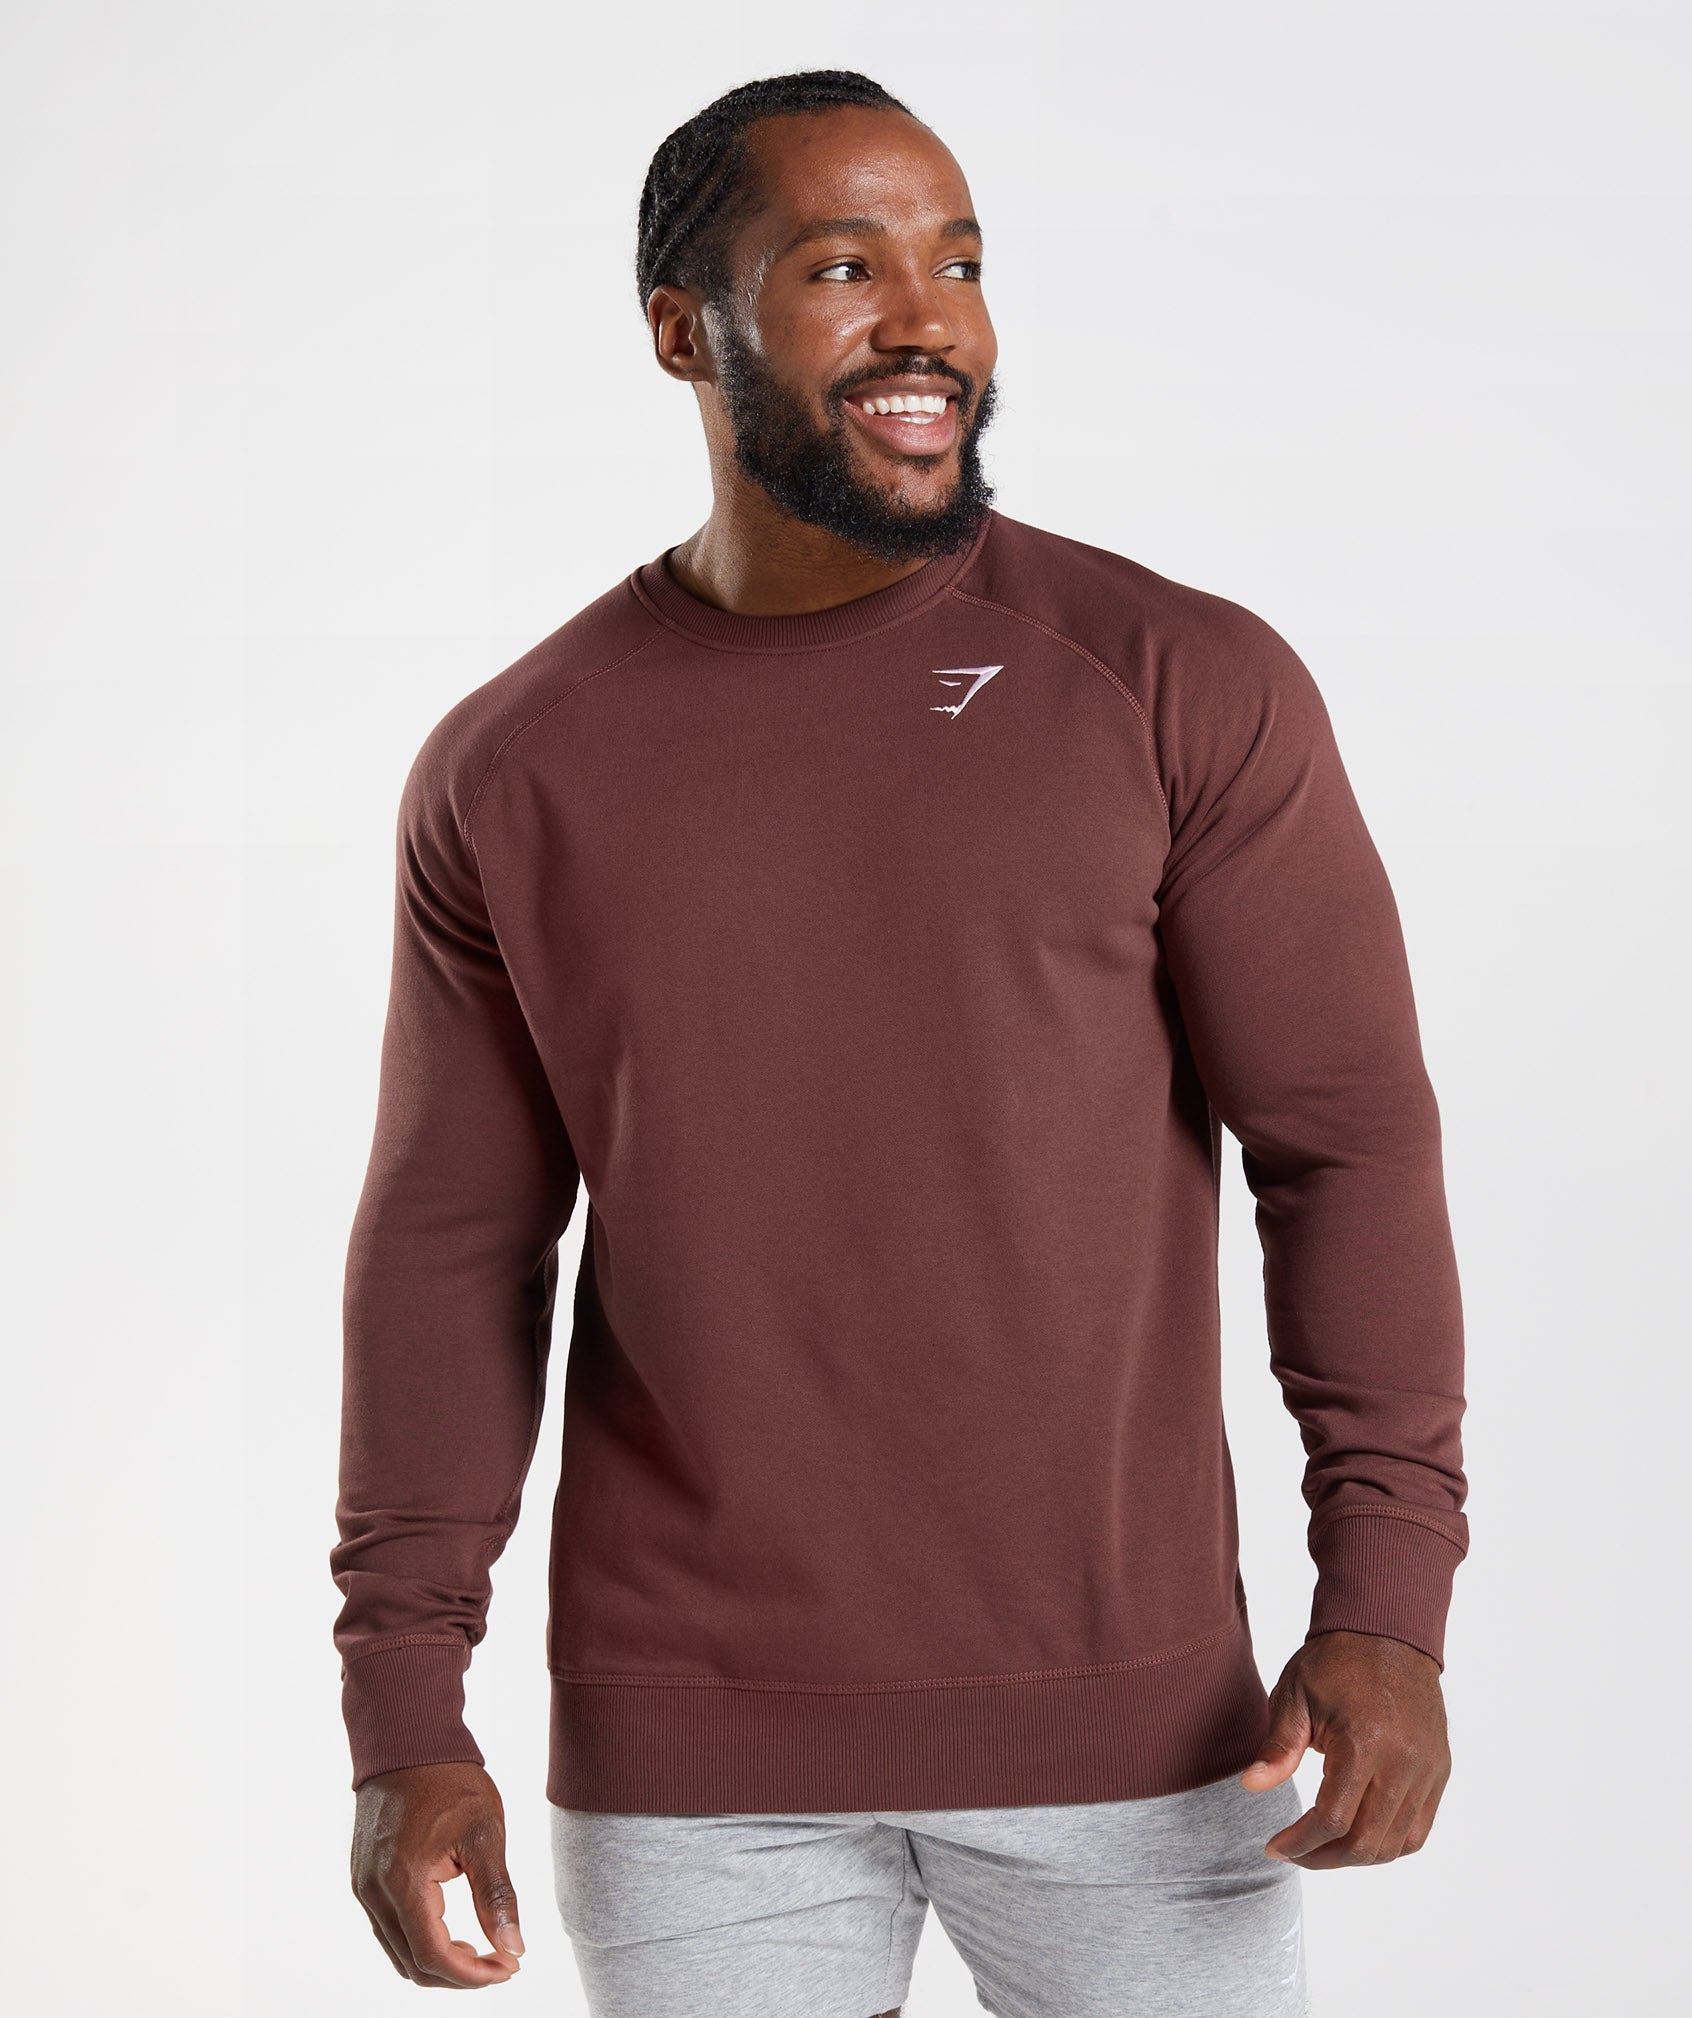 Crest Sweatshirt in Cherry Brown - view 1